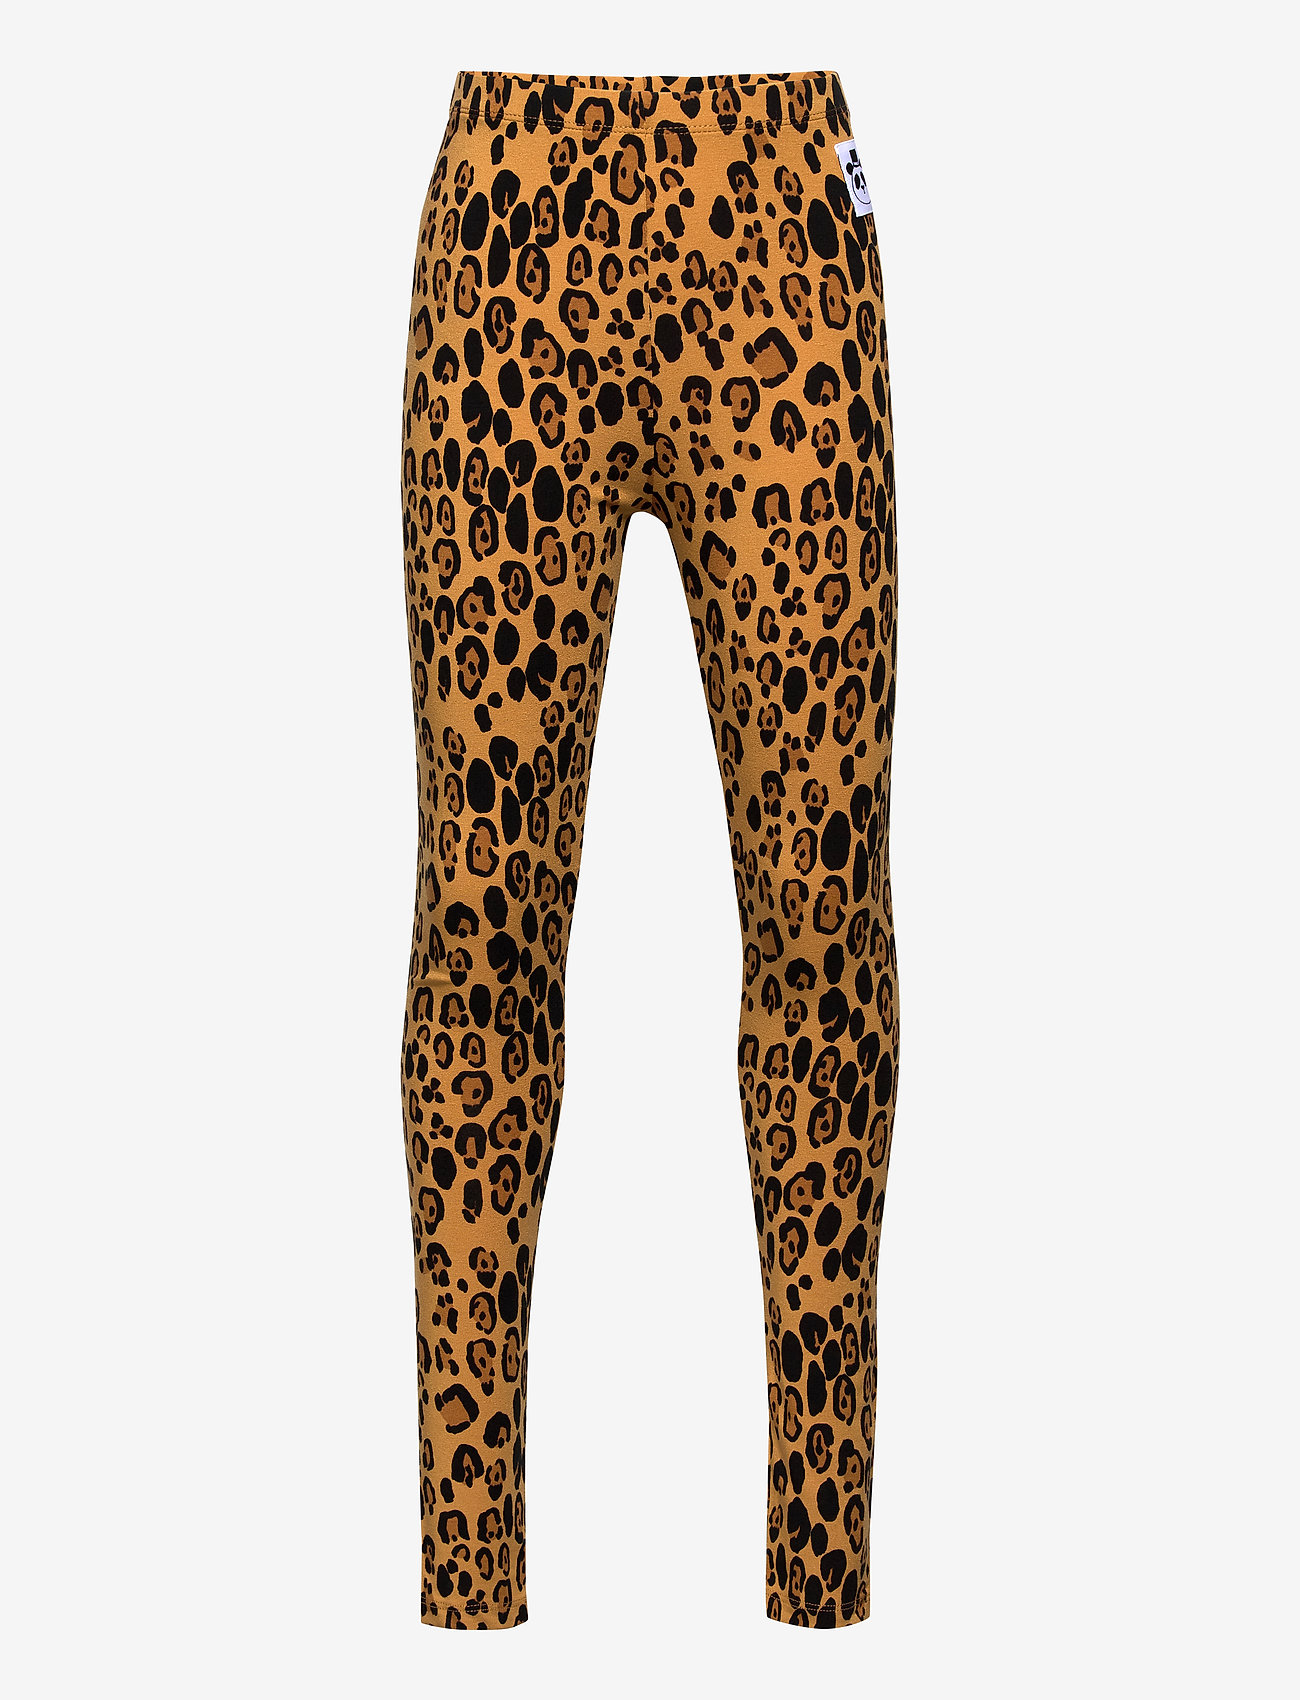 Mini Rodini - Basic leopard leggings - leggings - beige - 0